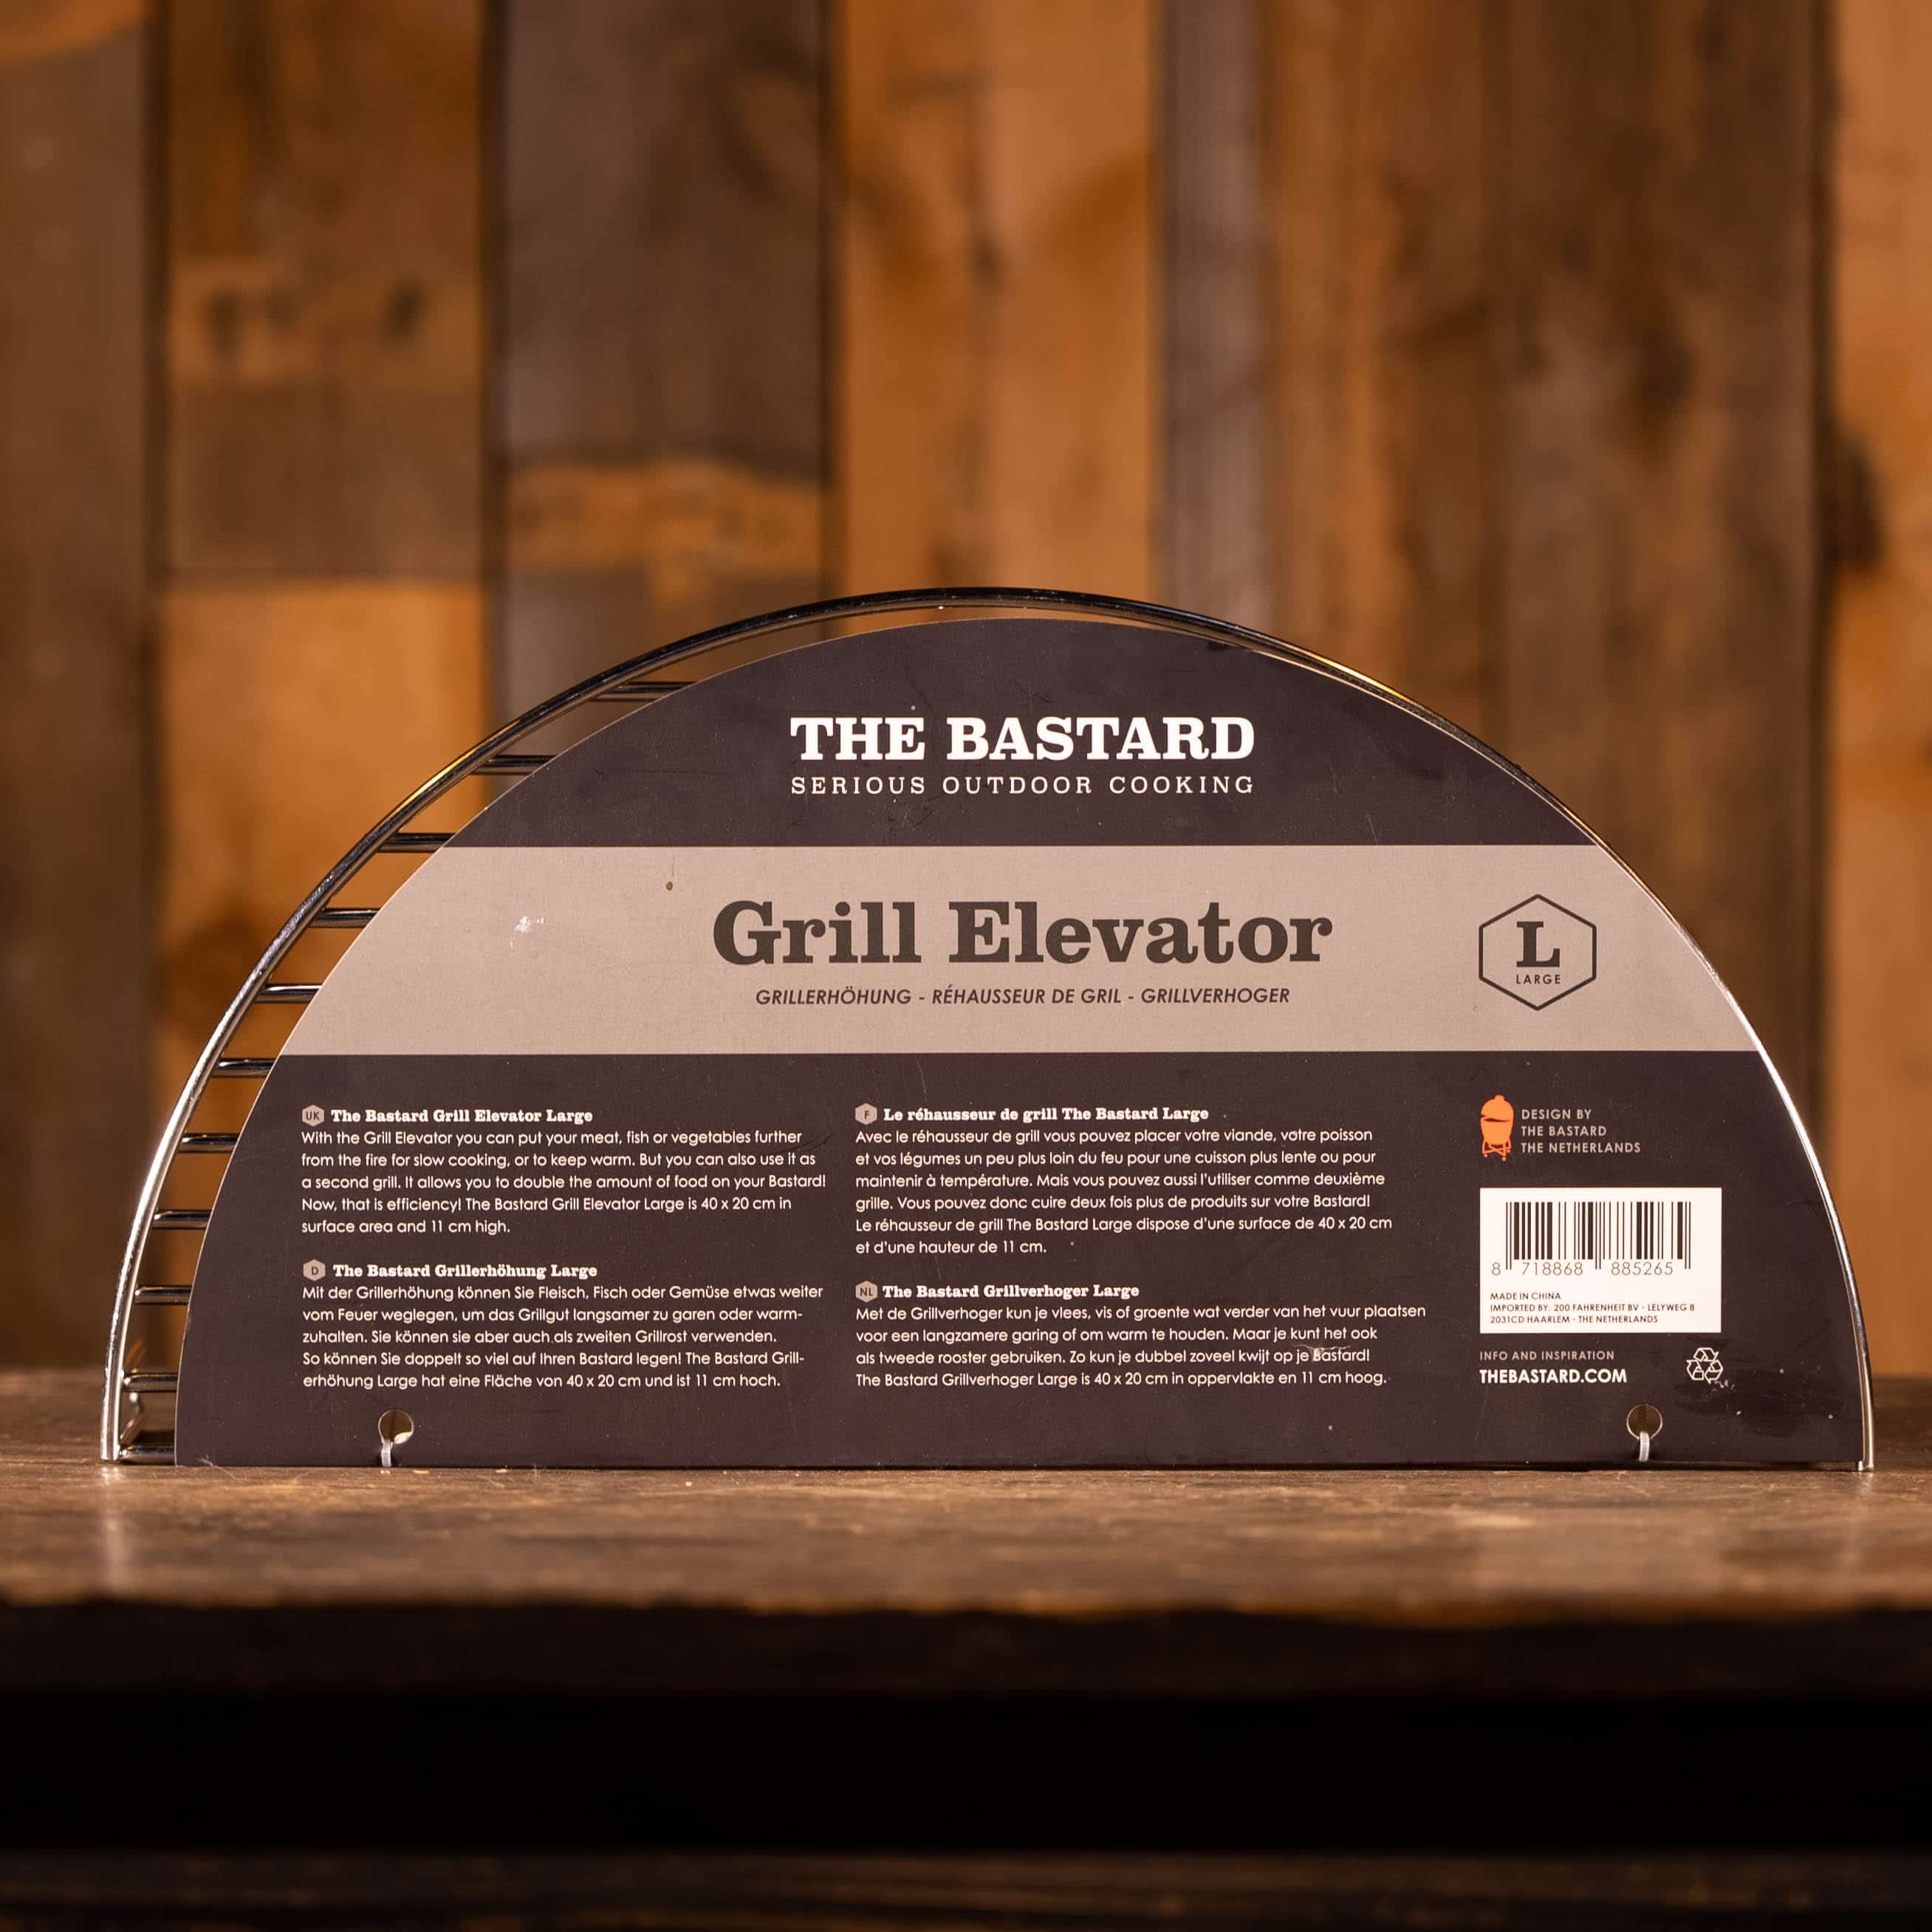 The Bastard Grill Elevator Large